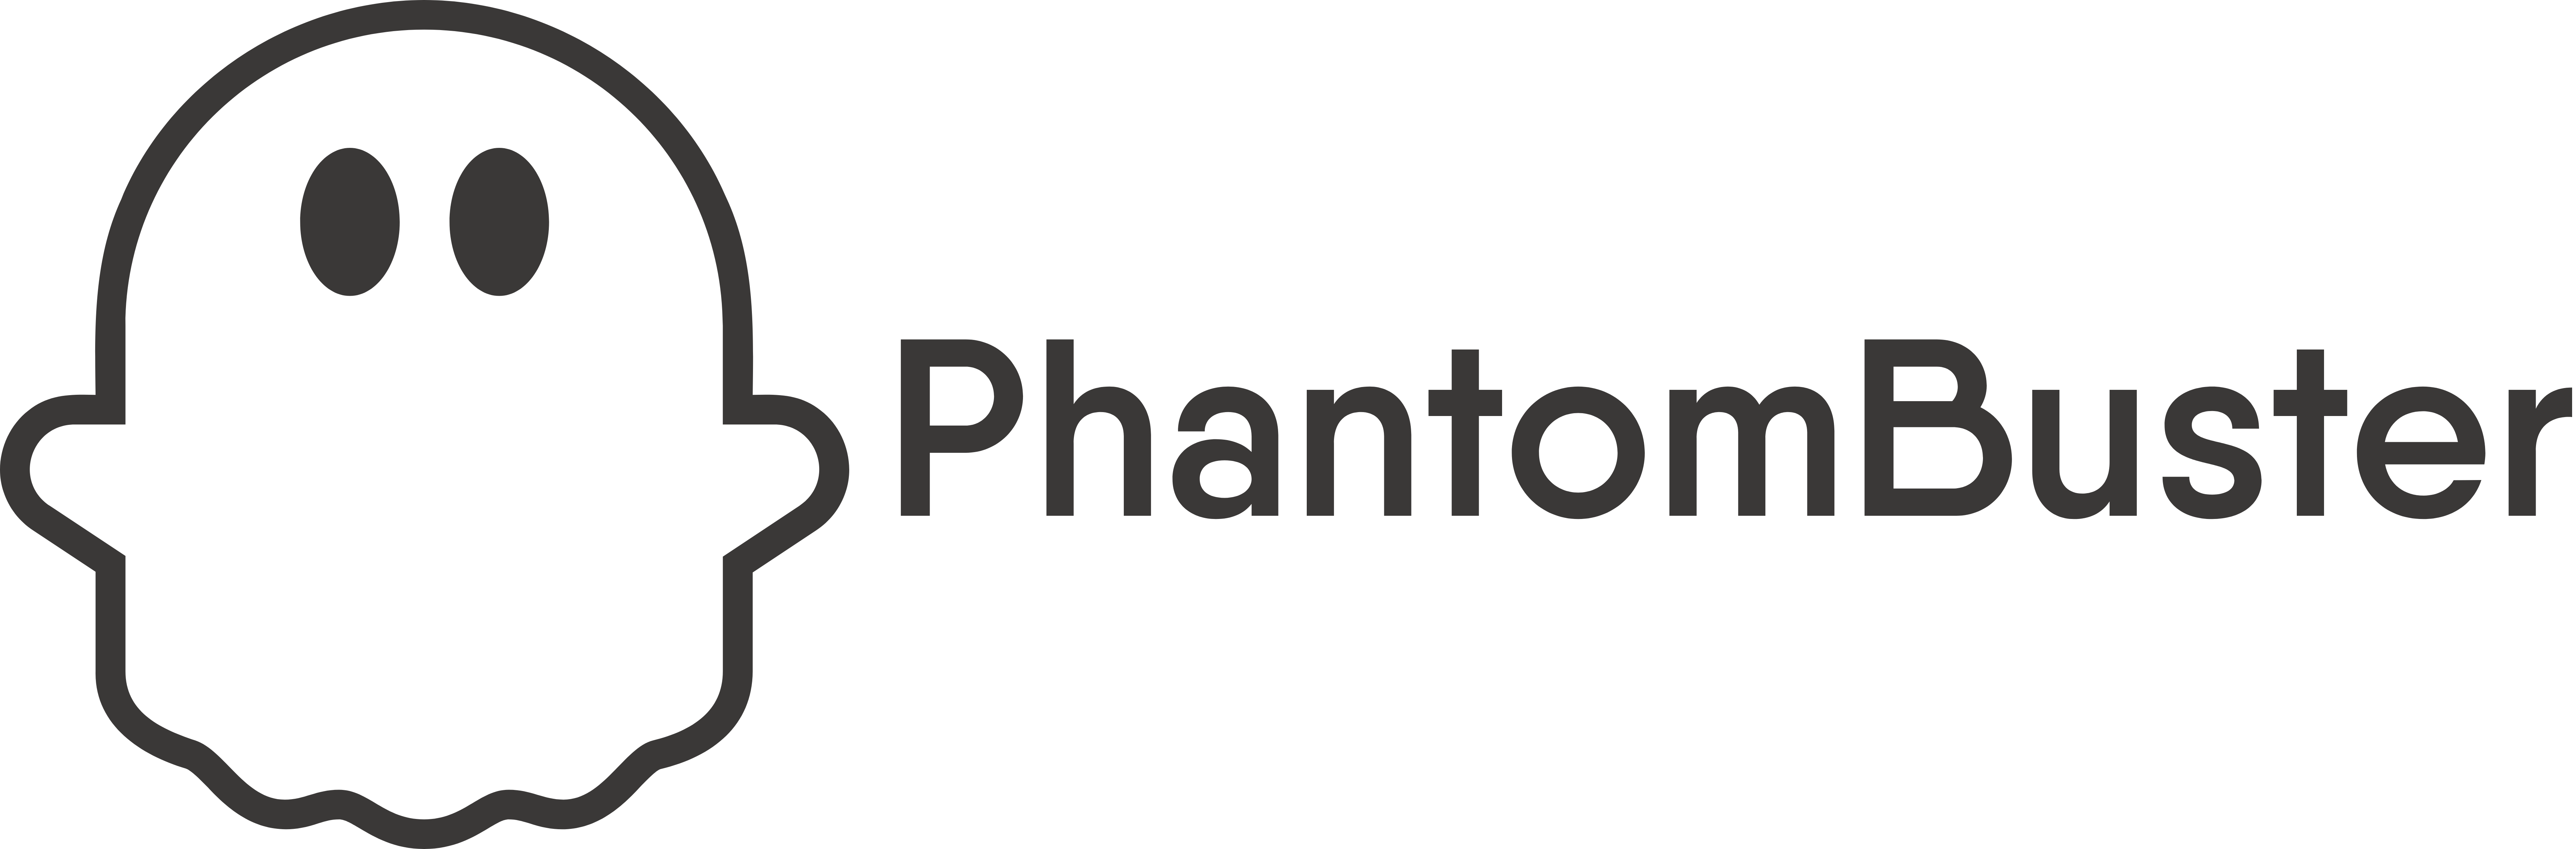 The Phantom Buster logo.